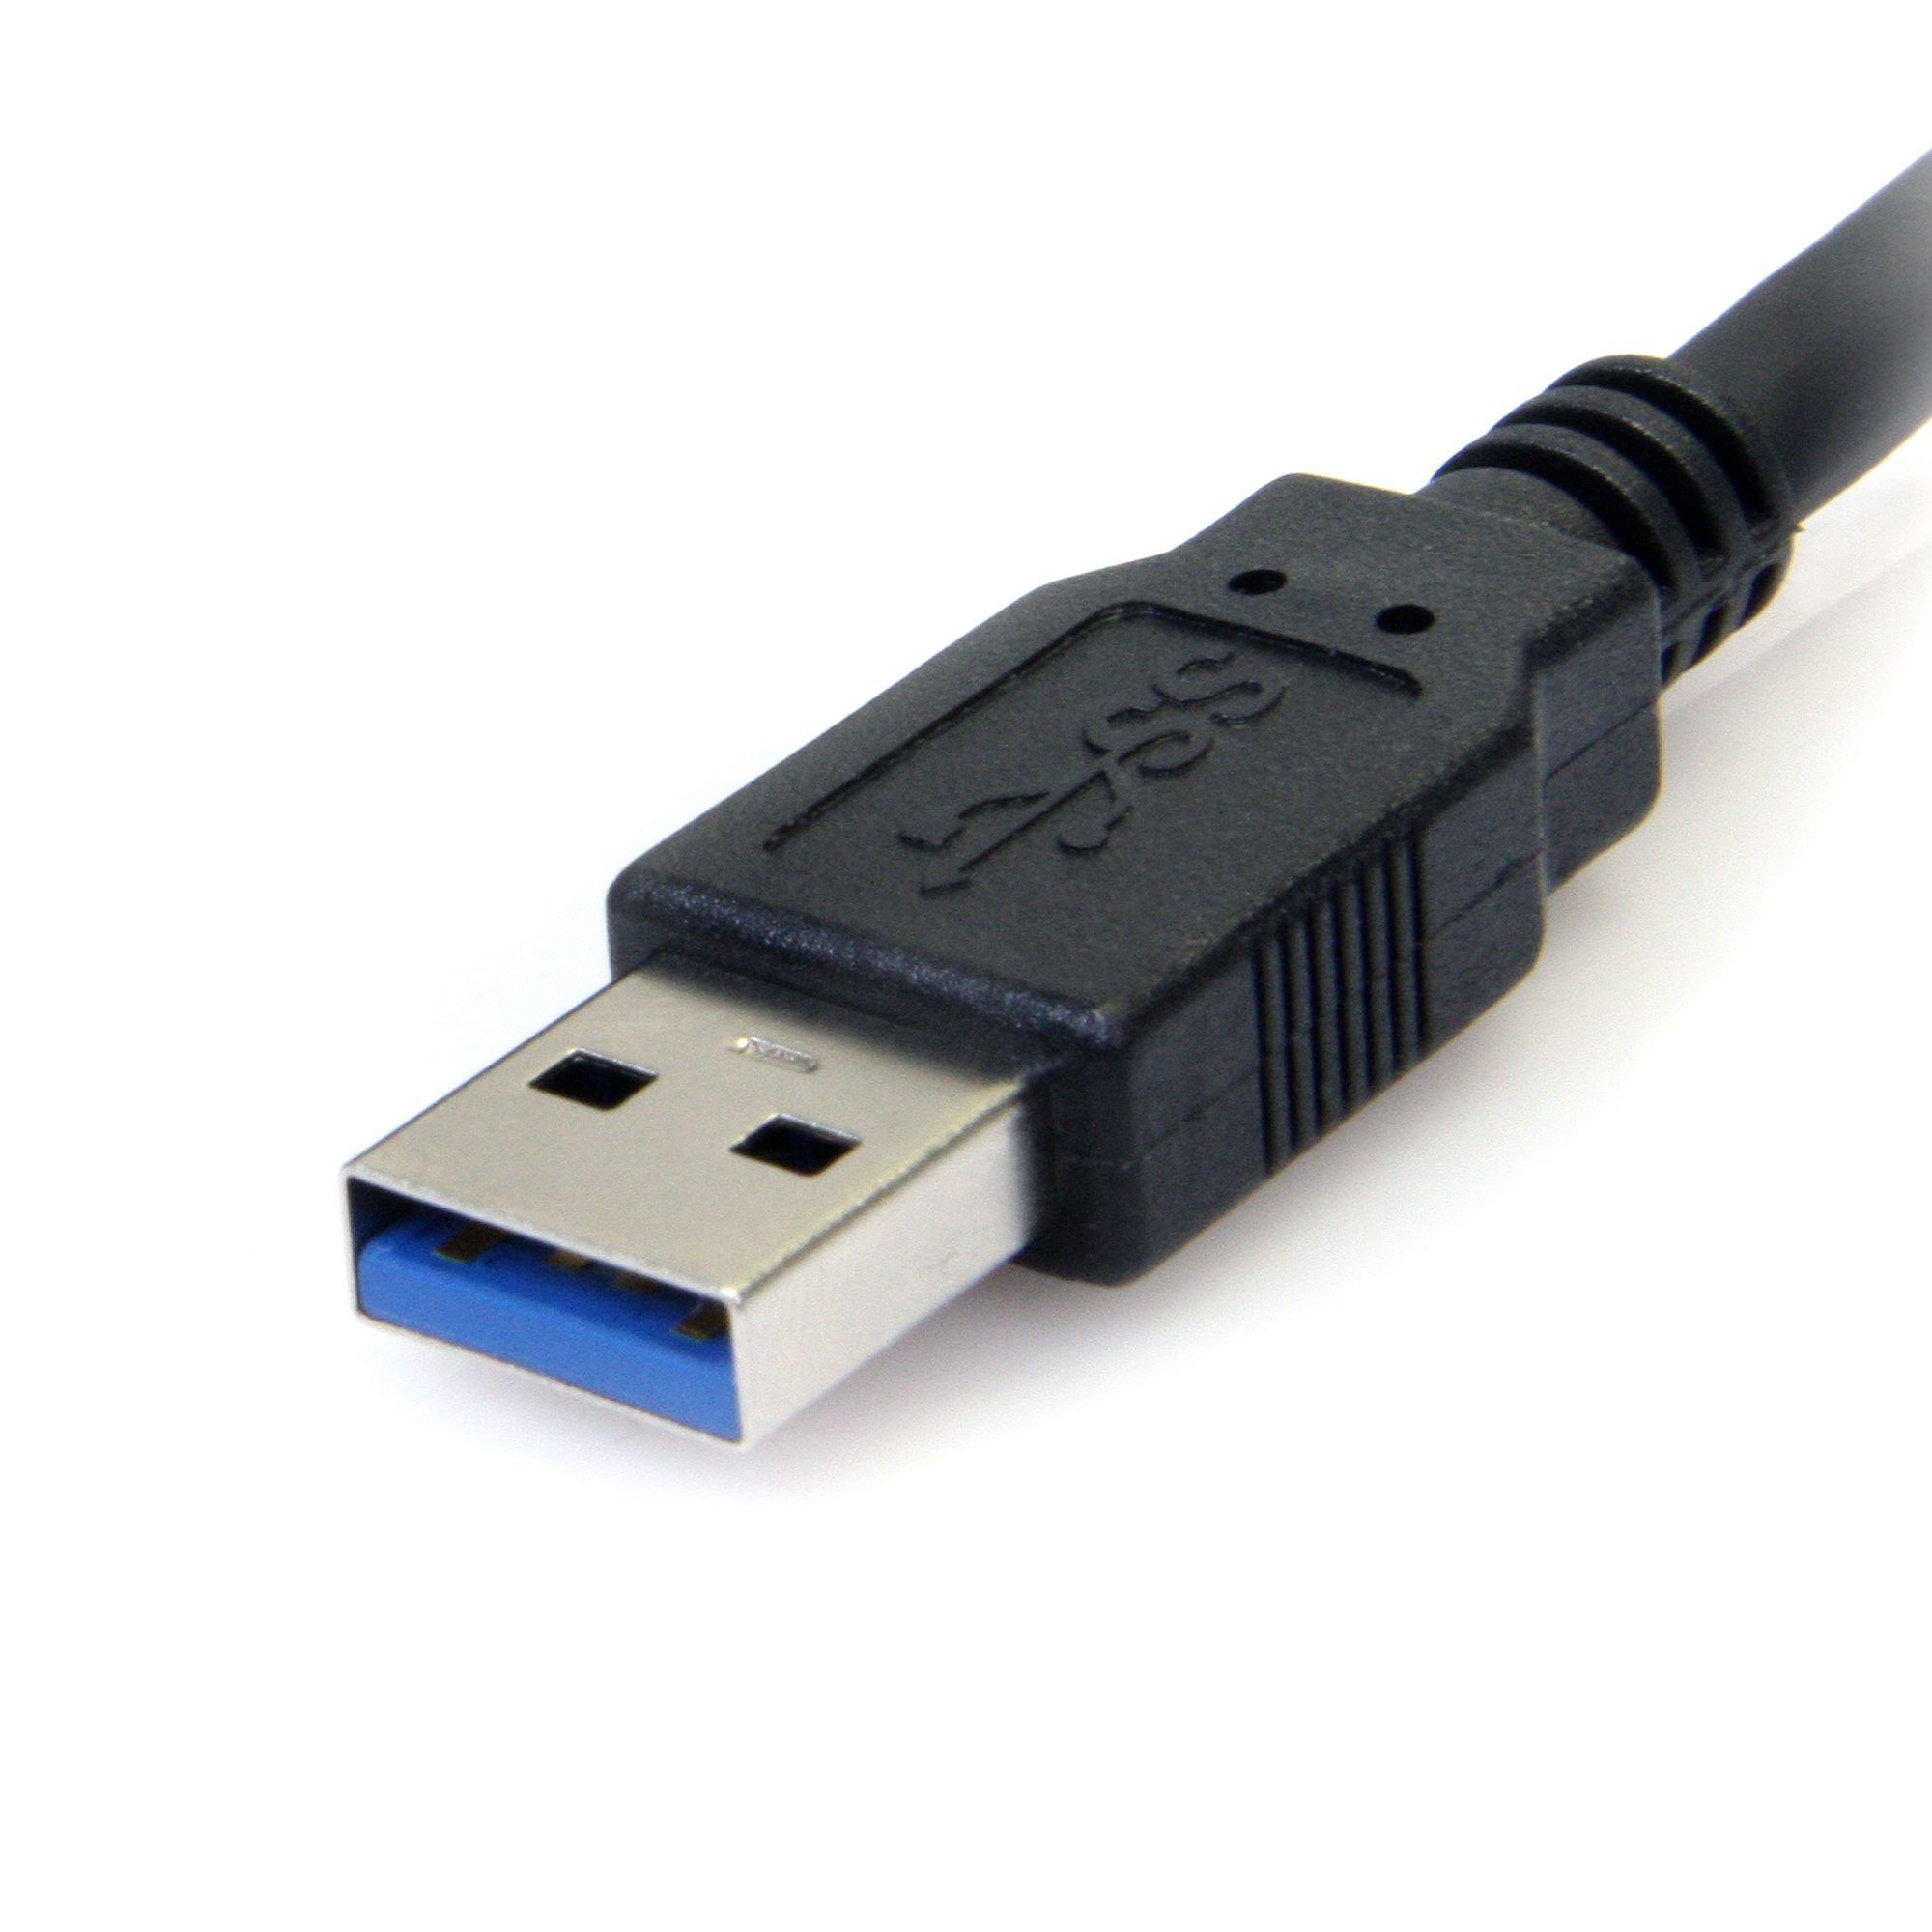 StarTech.com 3m / 10 ft USB C to USB B Printer Cable - M/M - USB 2.0 -  USB2CB3M - USB Cables 